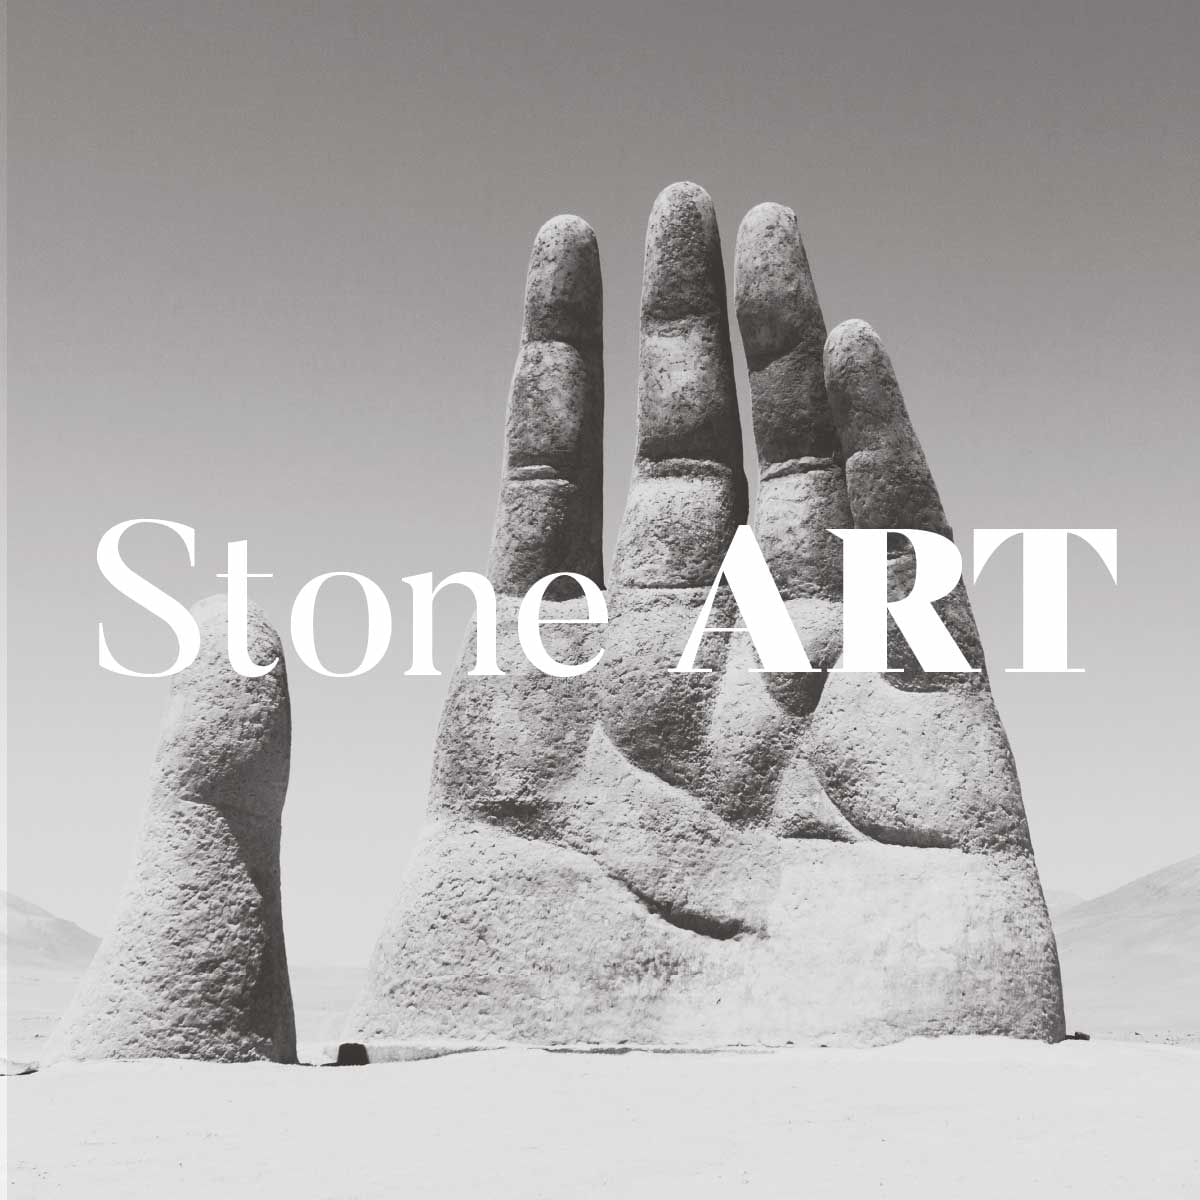 Stone Art